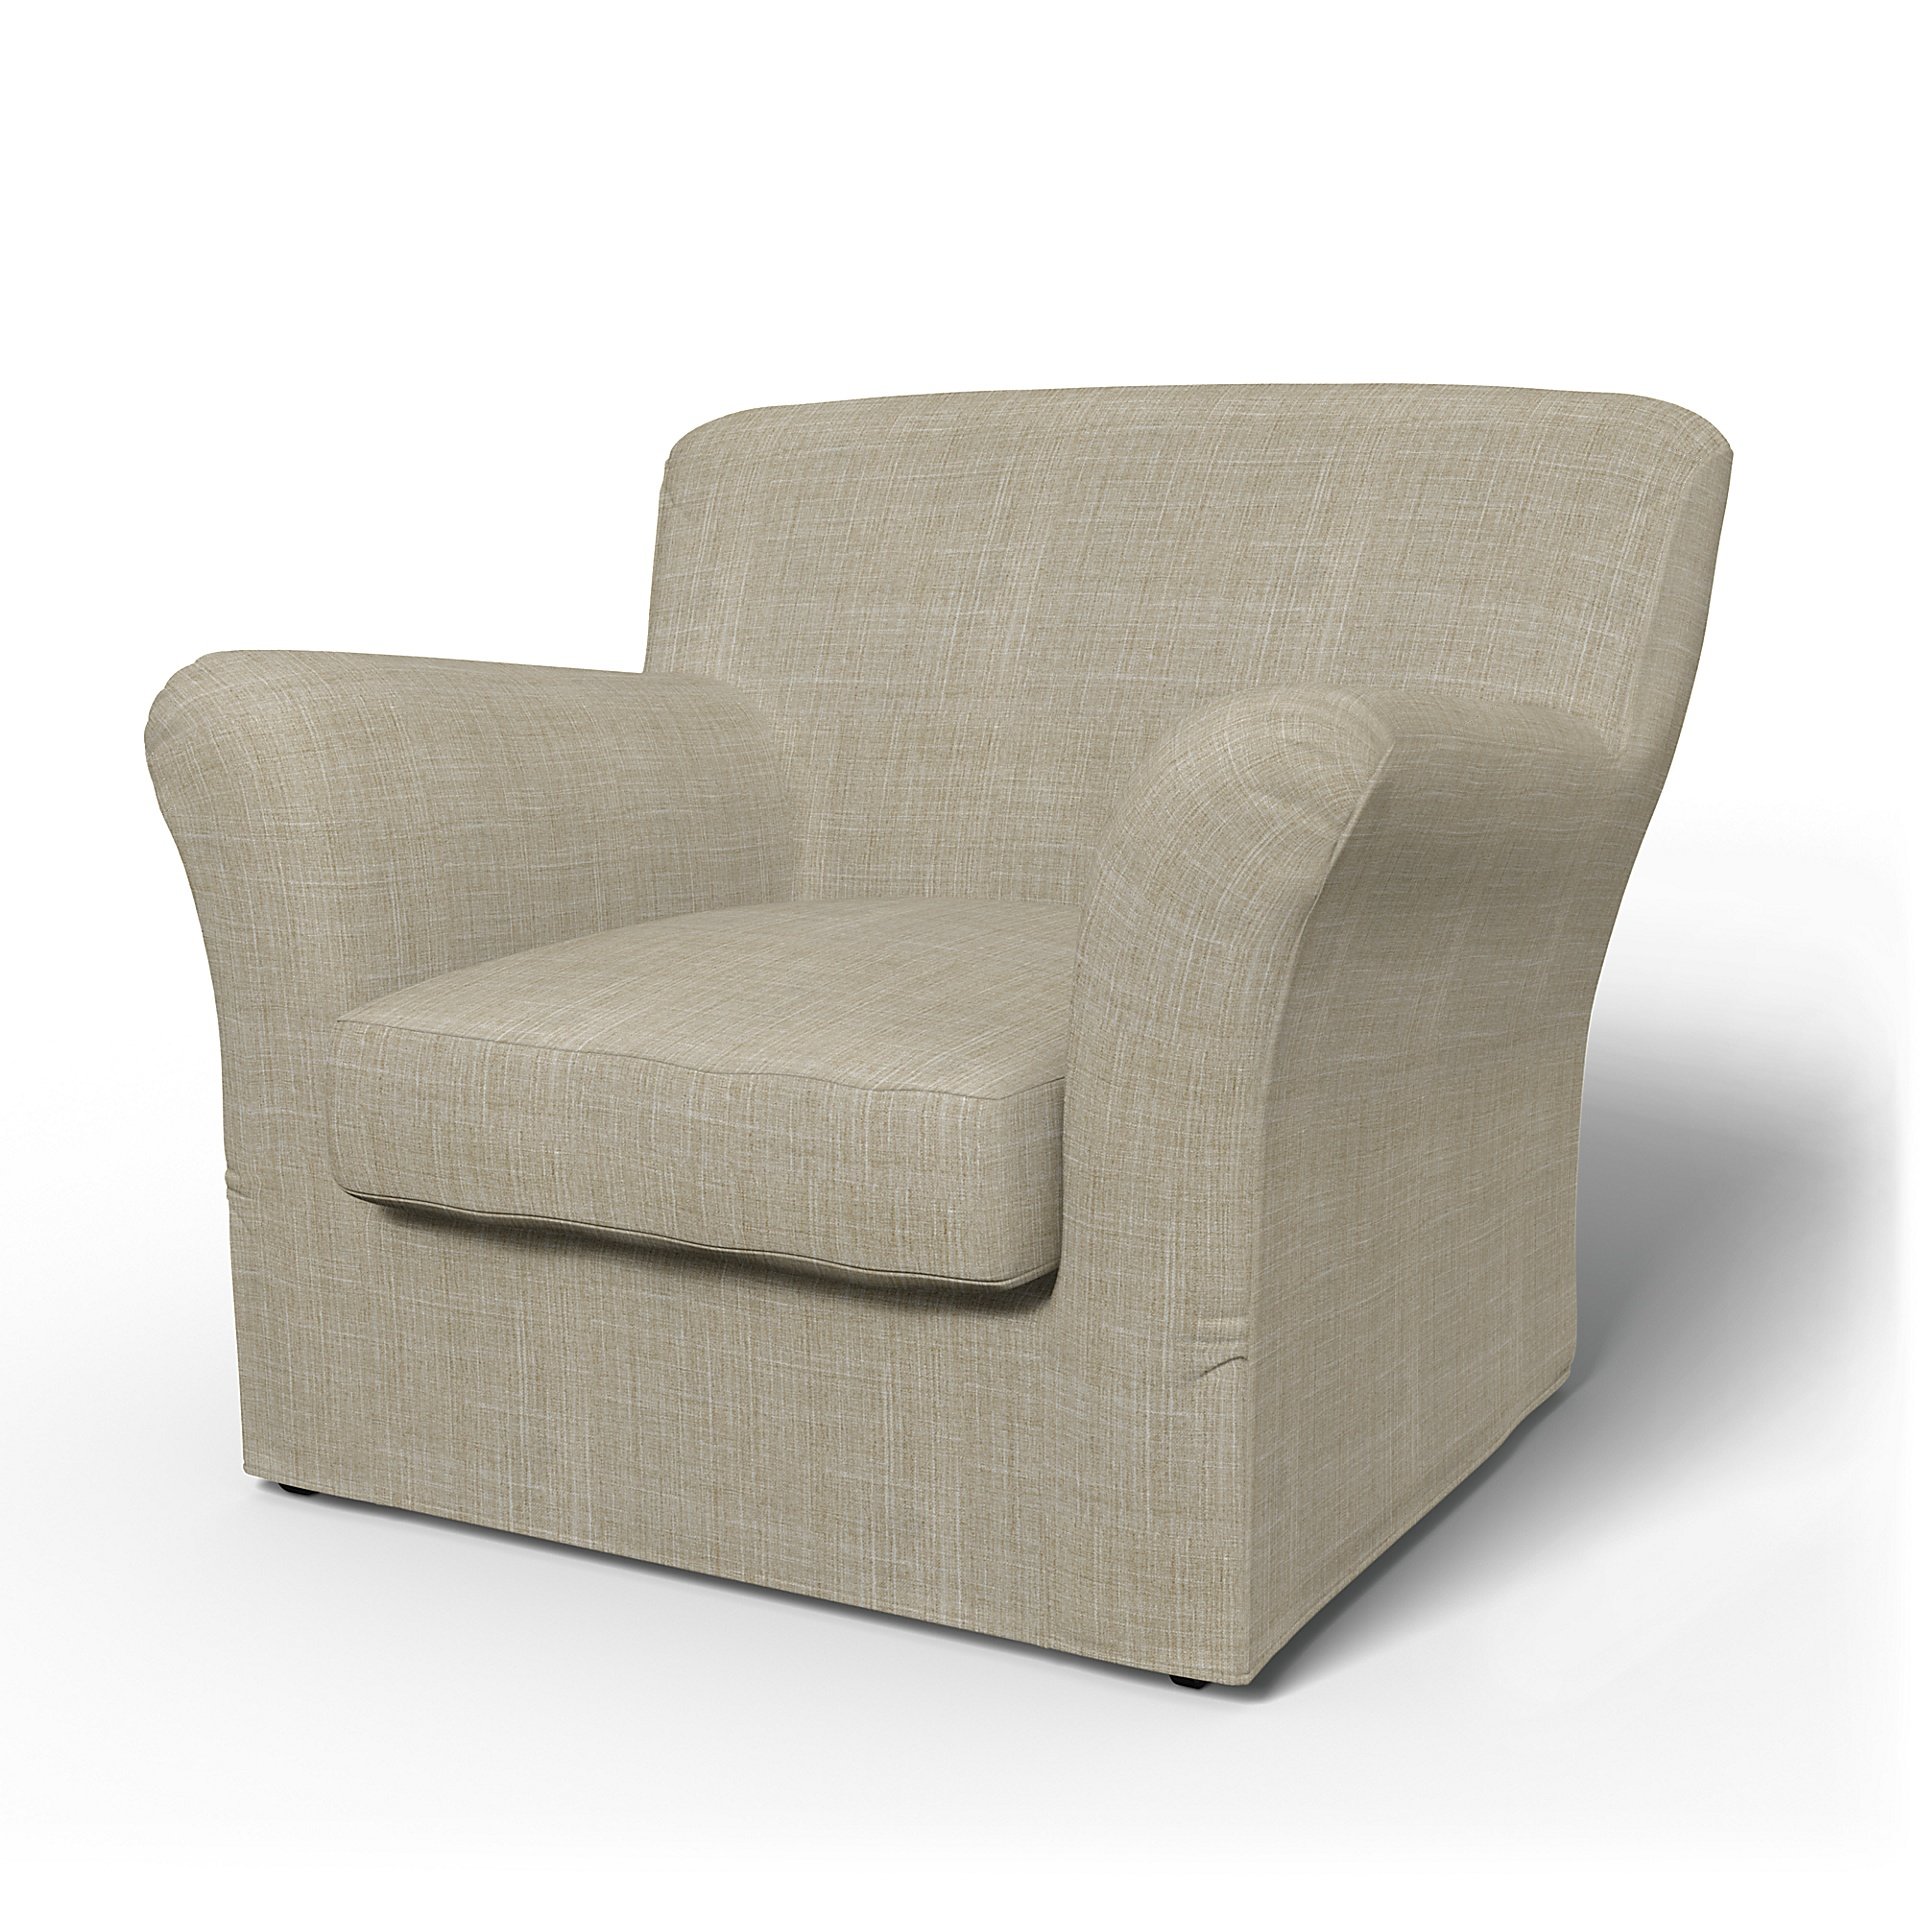 IKEA - Tomelilla Low Back Armchair Cover (Standard model), Sand Beige, Boucle & Texture - Bemz